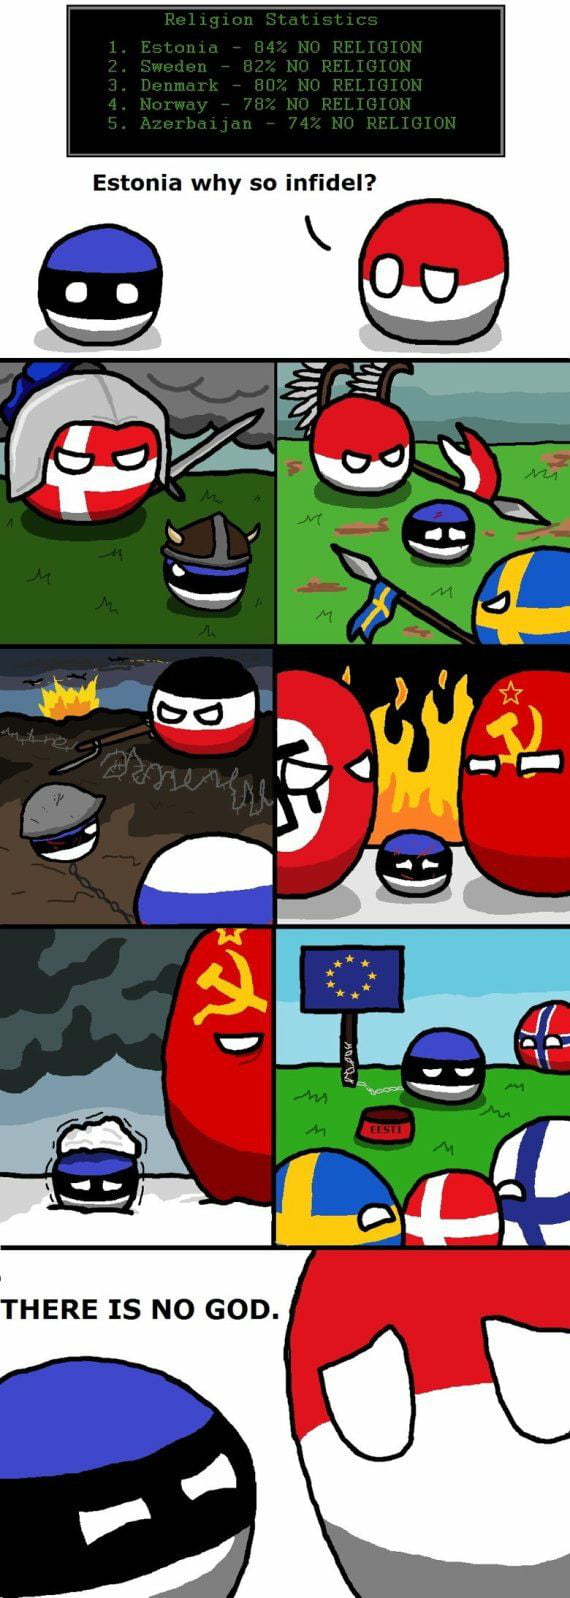 Poor Estonia